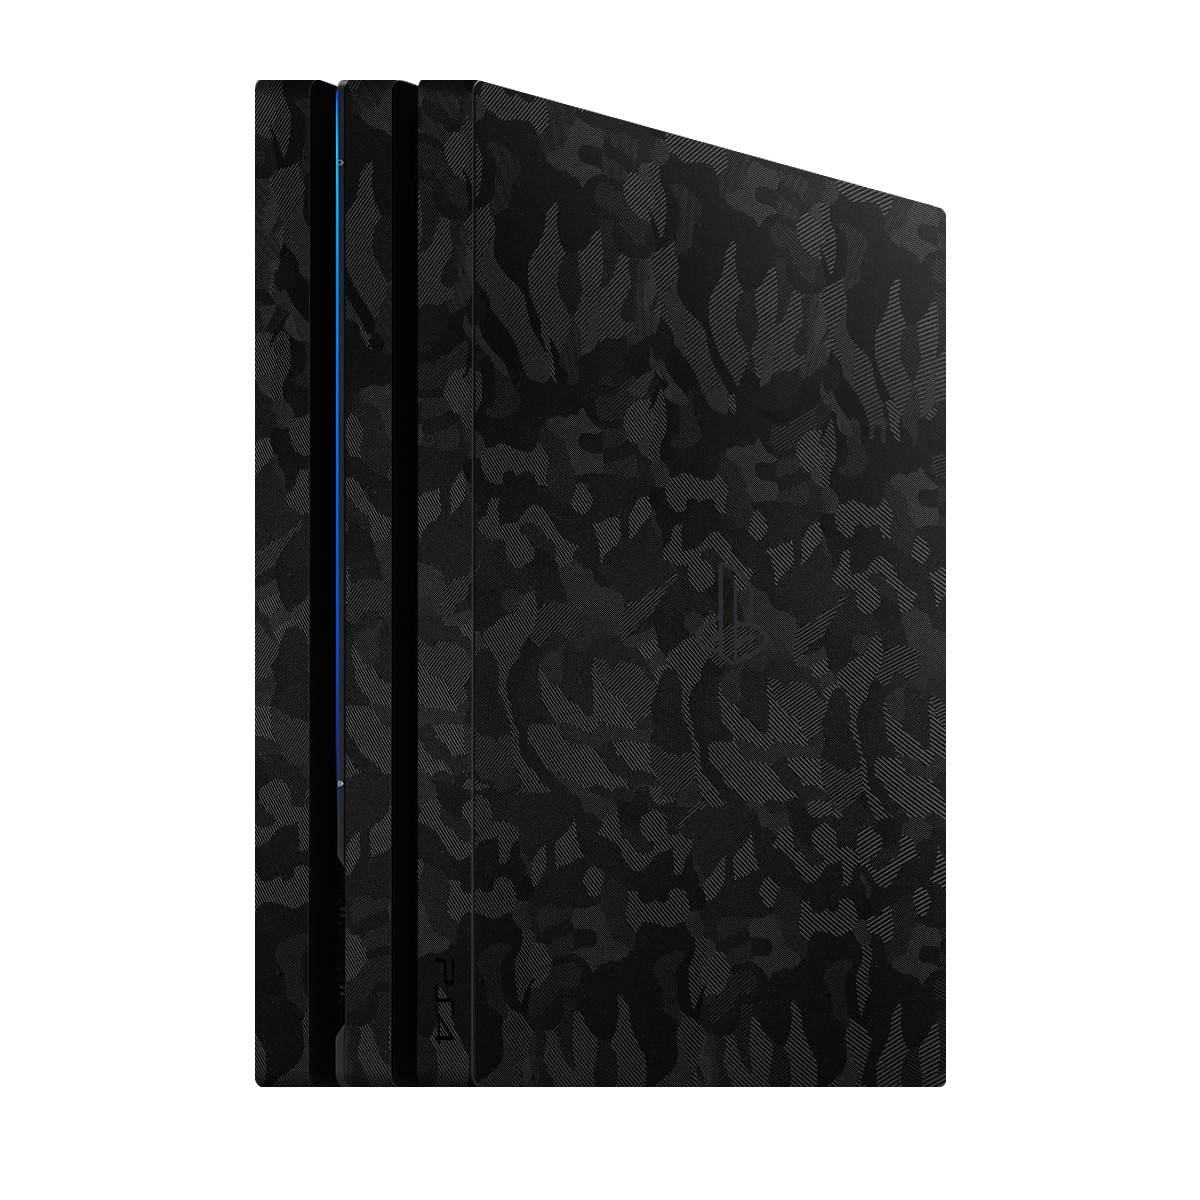 PlayStation 4 Pro Kaplama Siyah Kamuflaj